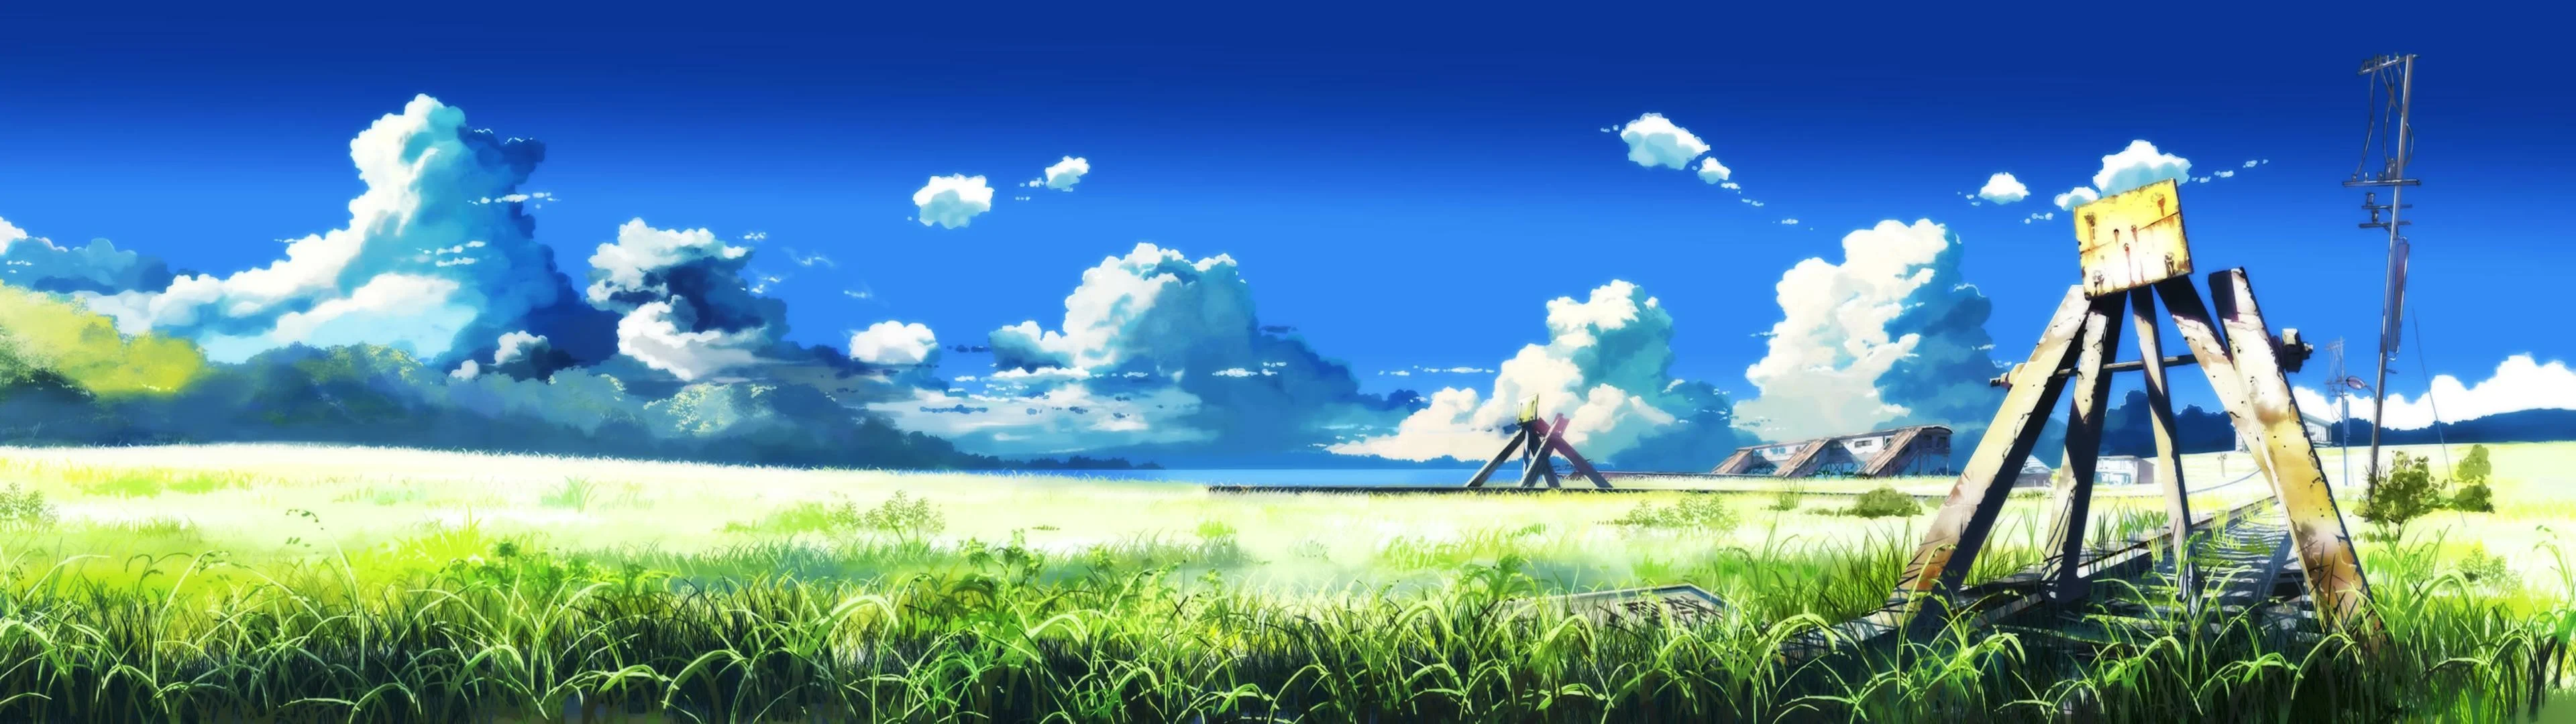 Anime Landscape Dual Screen Res: / Size:441kb. Views: 74029